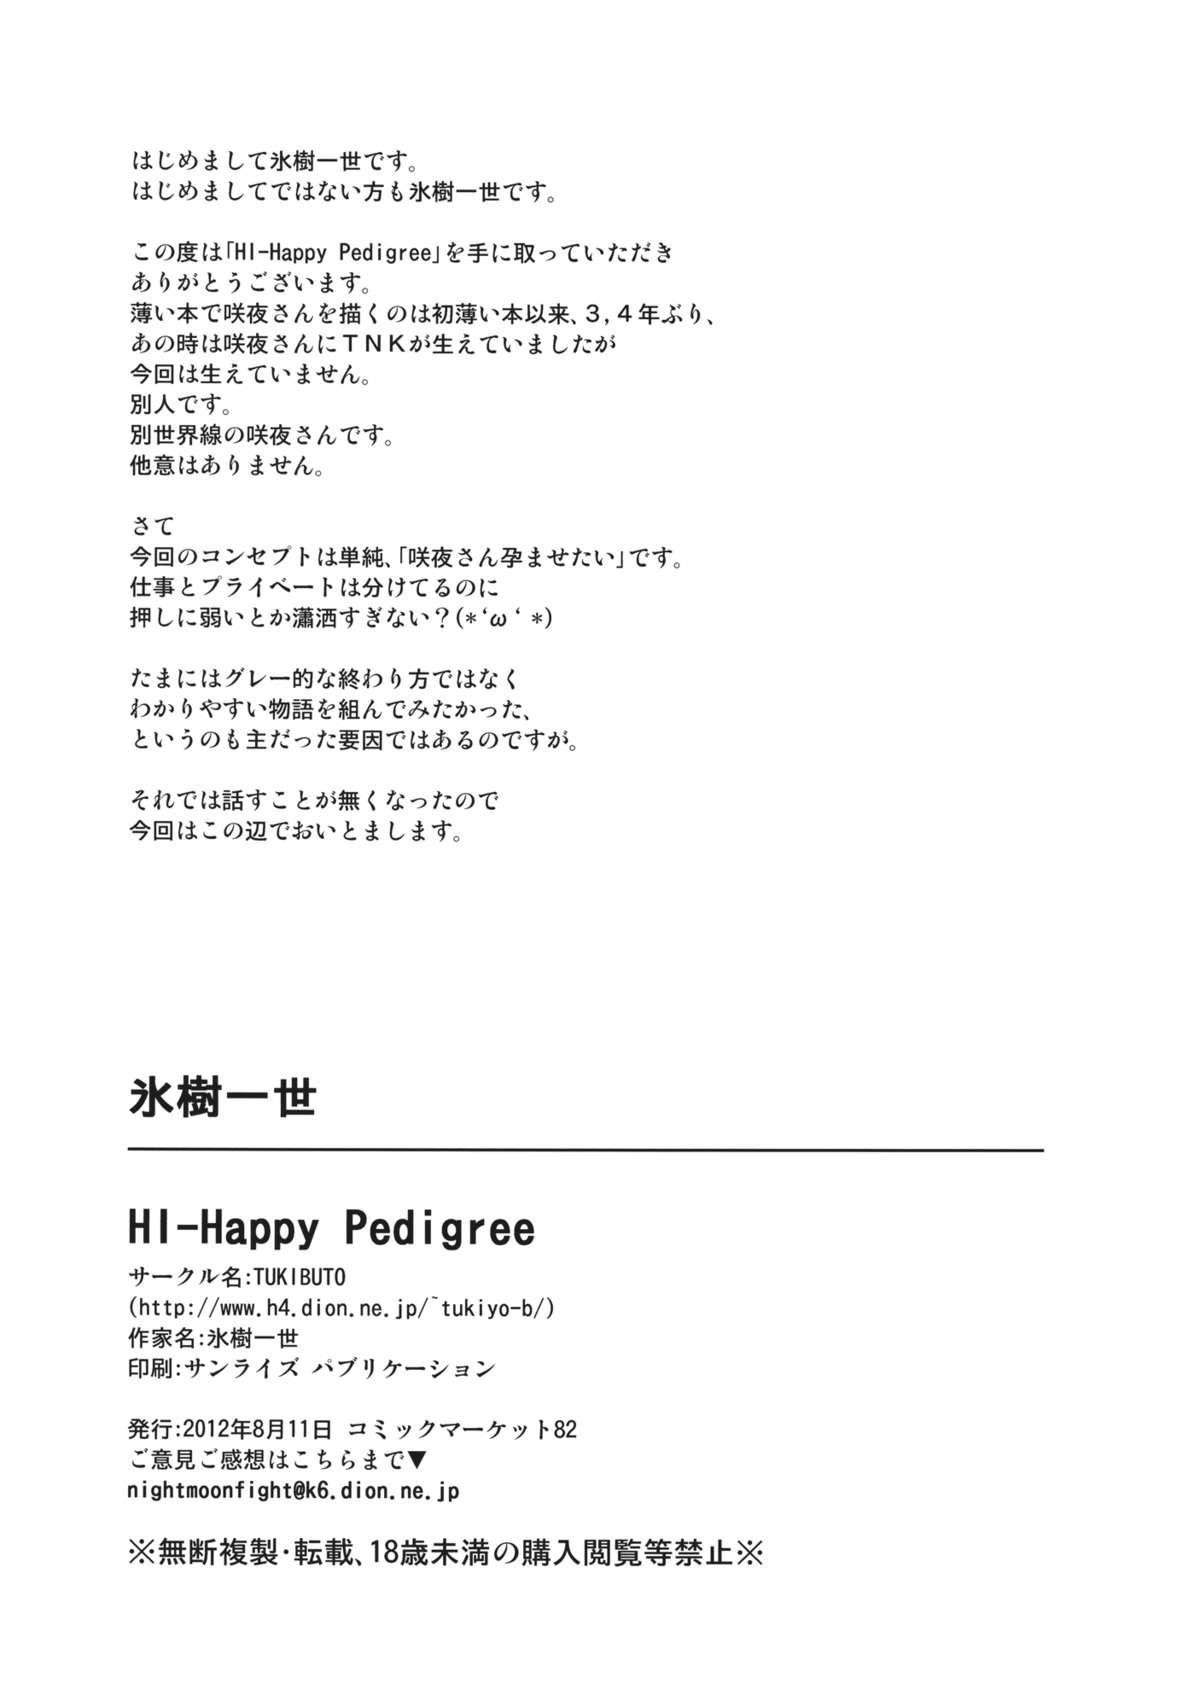 HI-Happy Pedigree 25